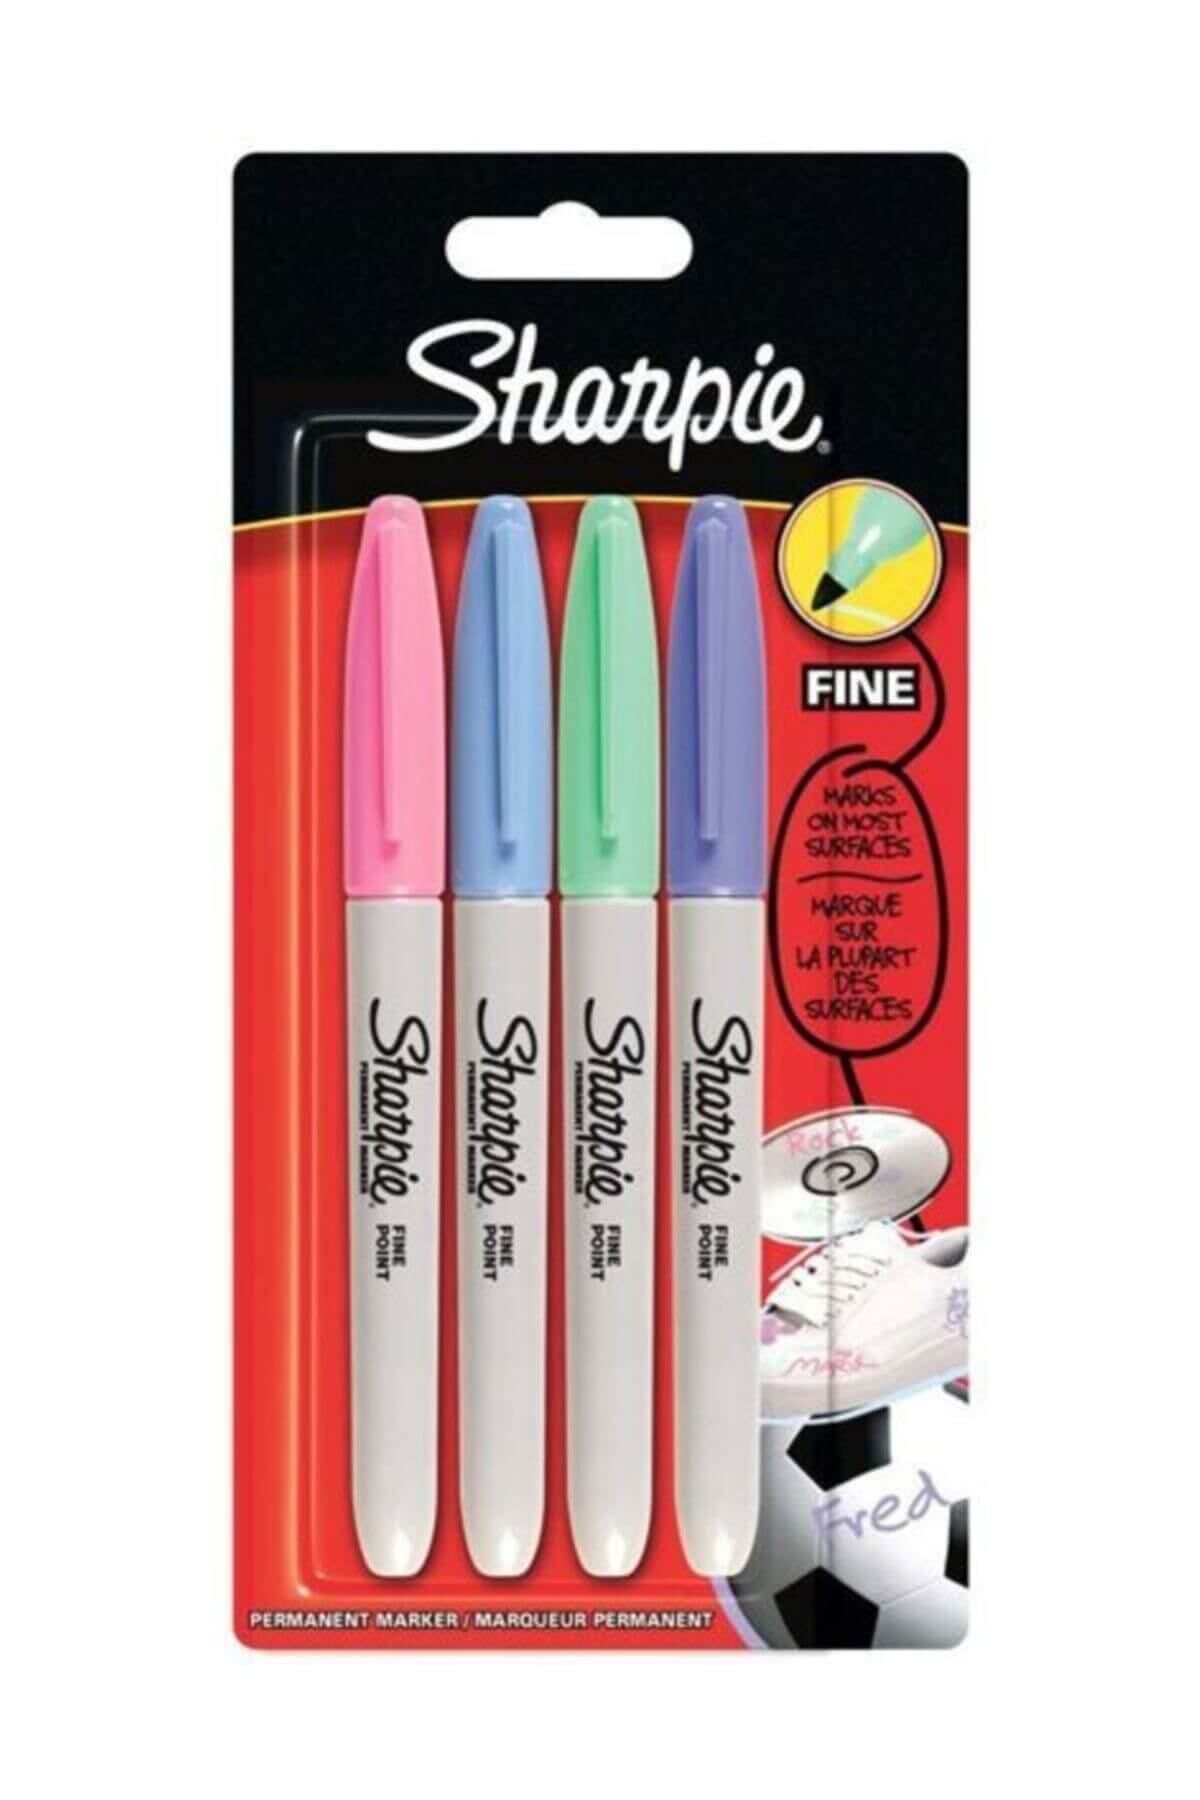 Sharpie Permanent Marker Kalem Fine Uç 4 Pastel Renk Set